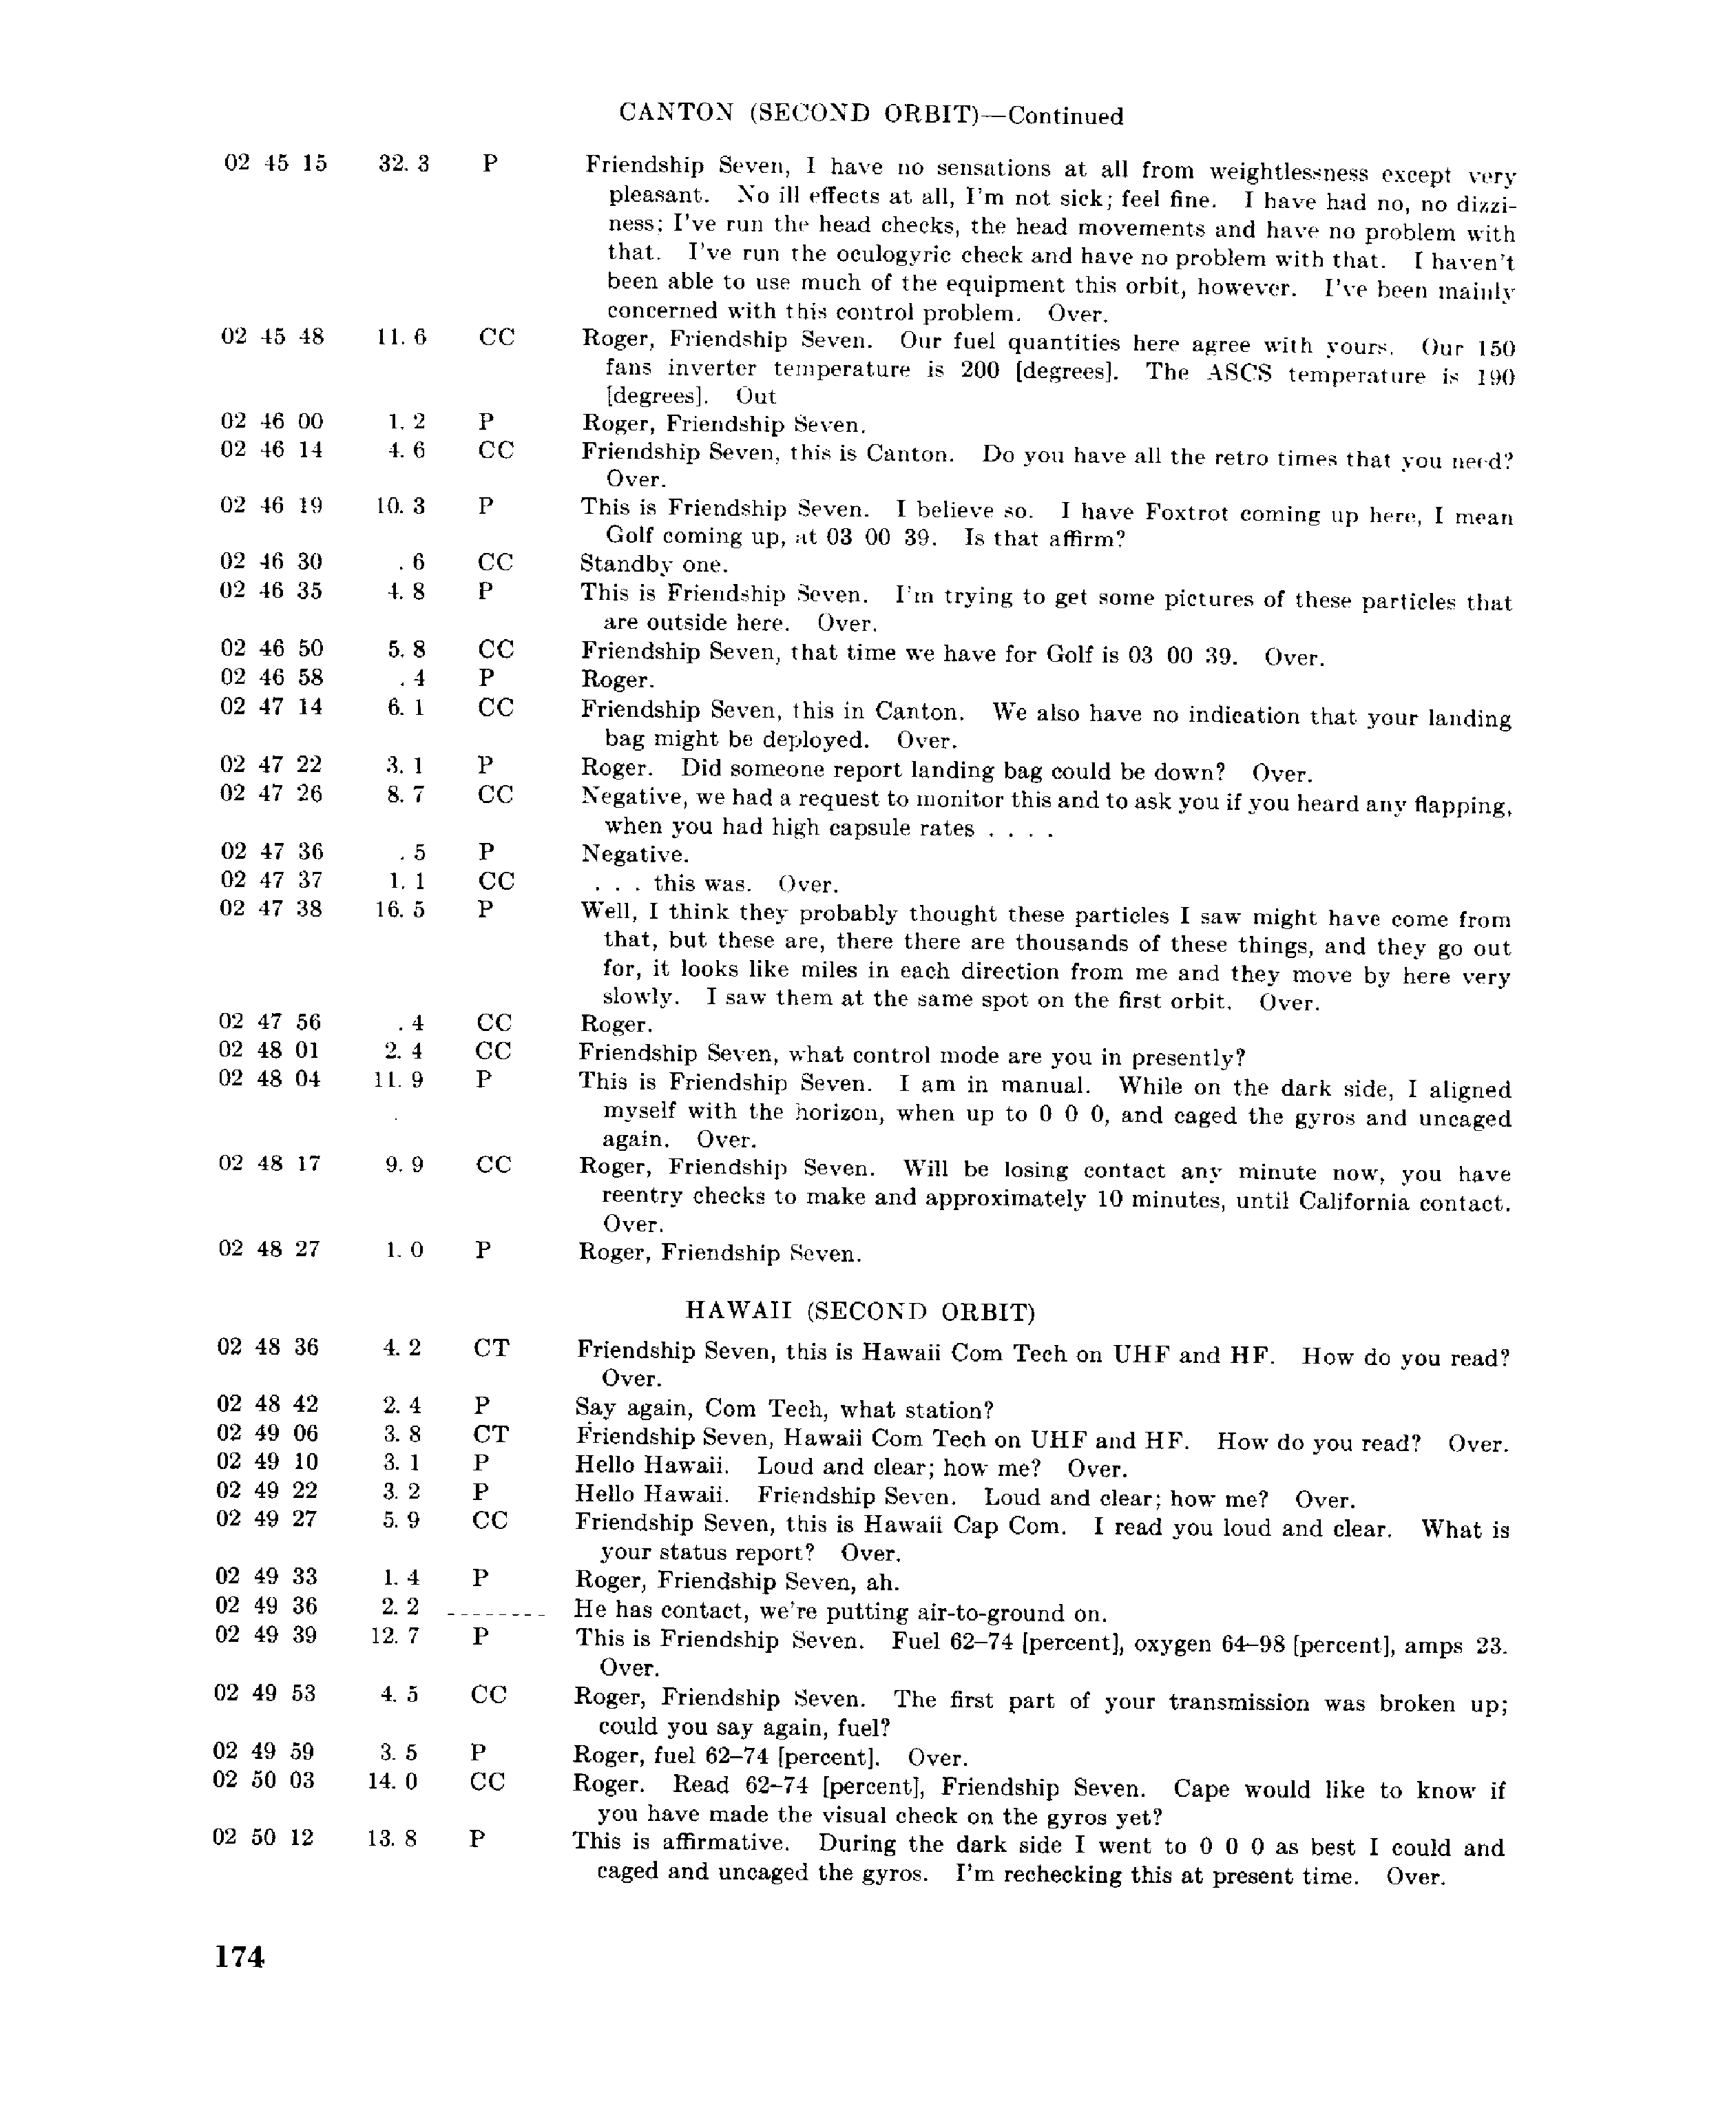 Page 173 of Mercury 6’s original transcript